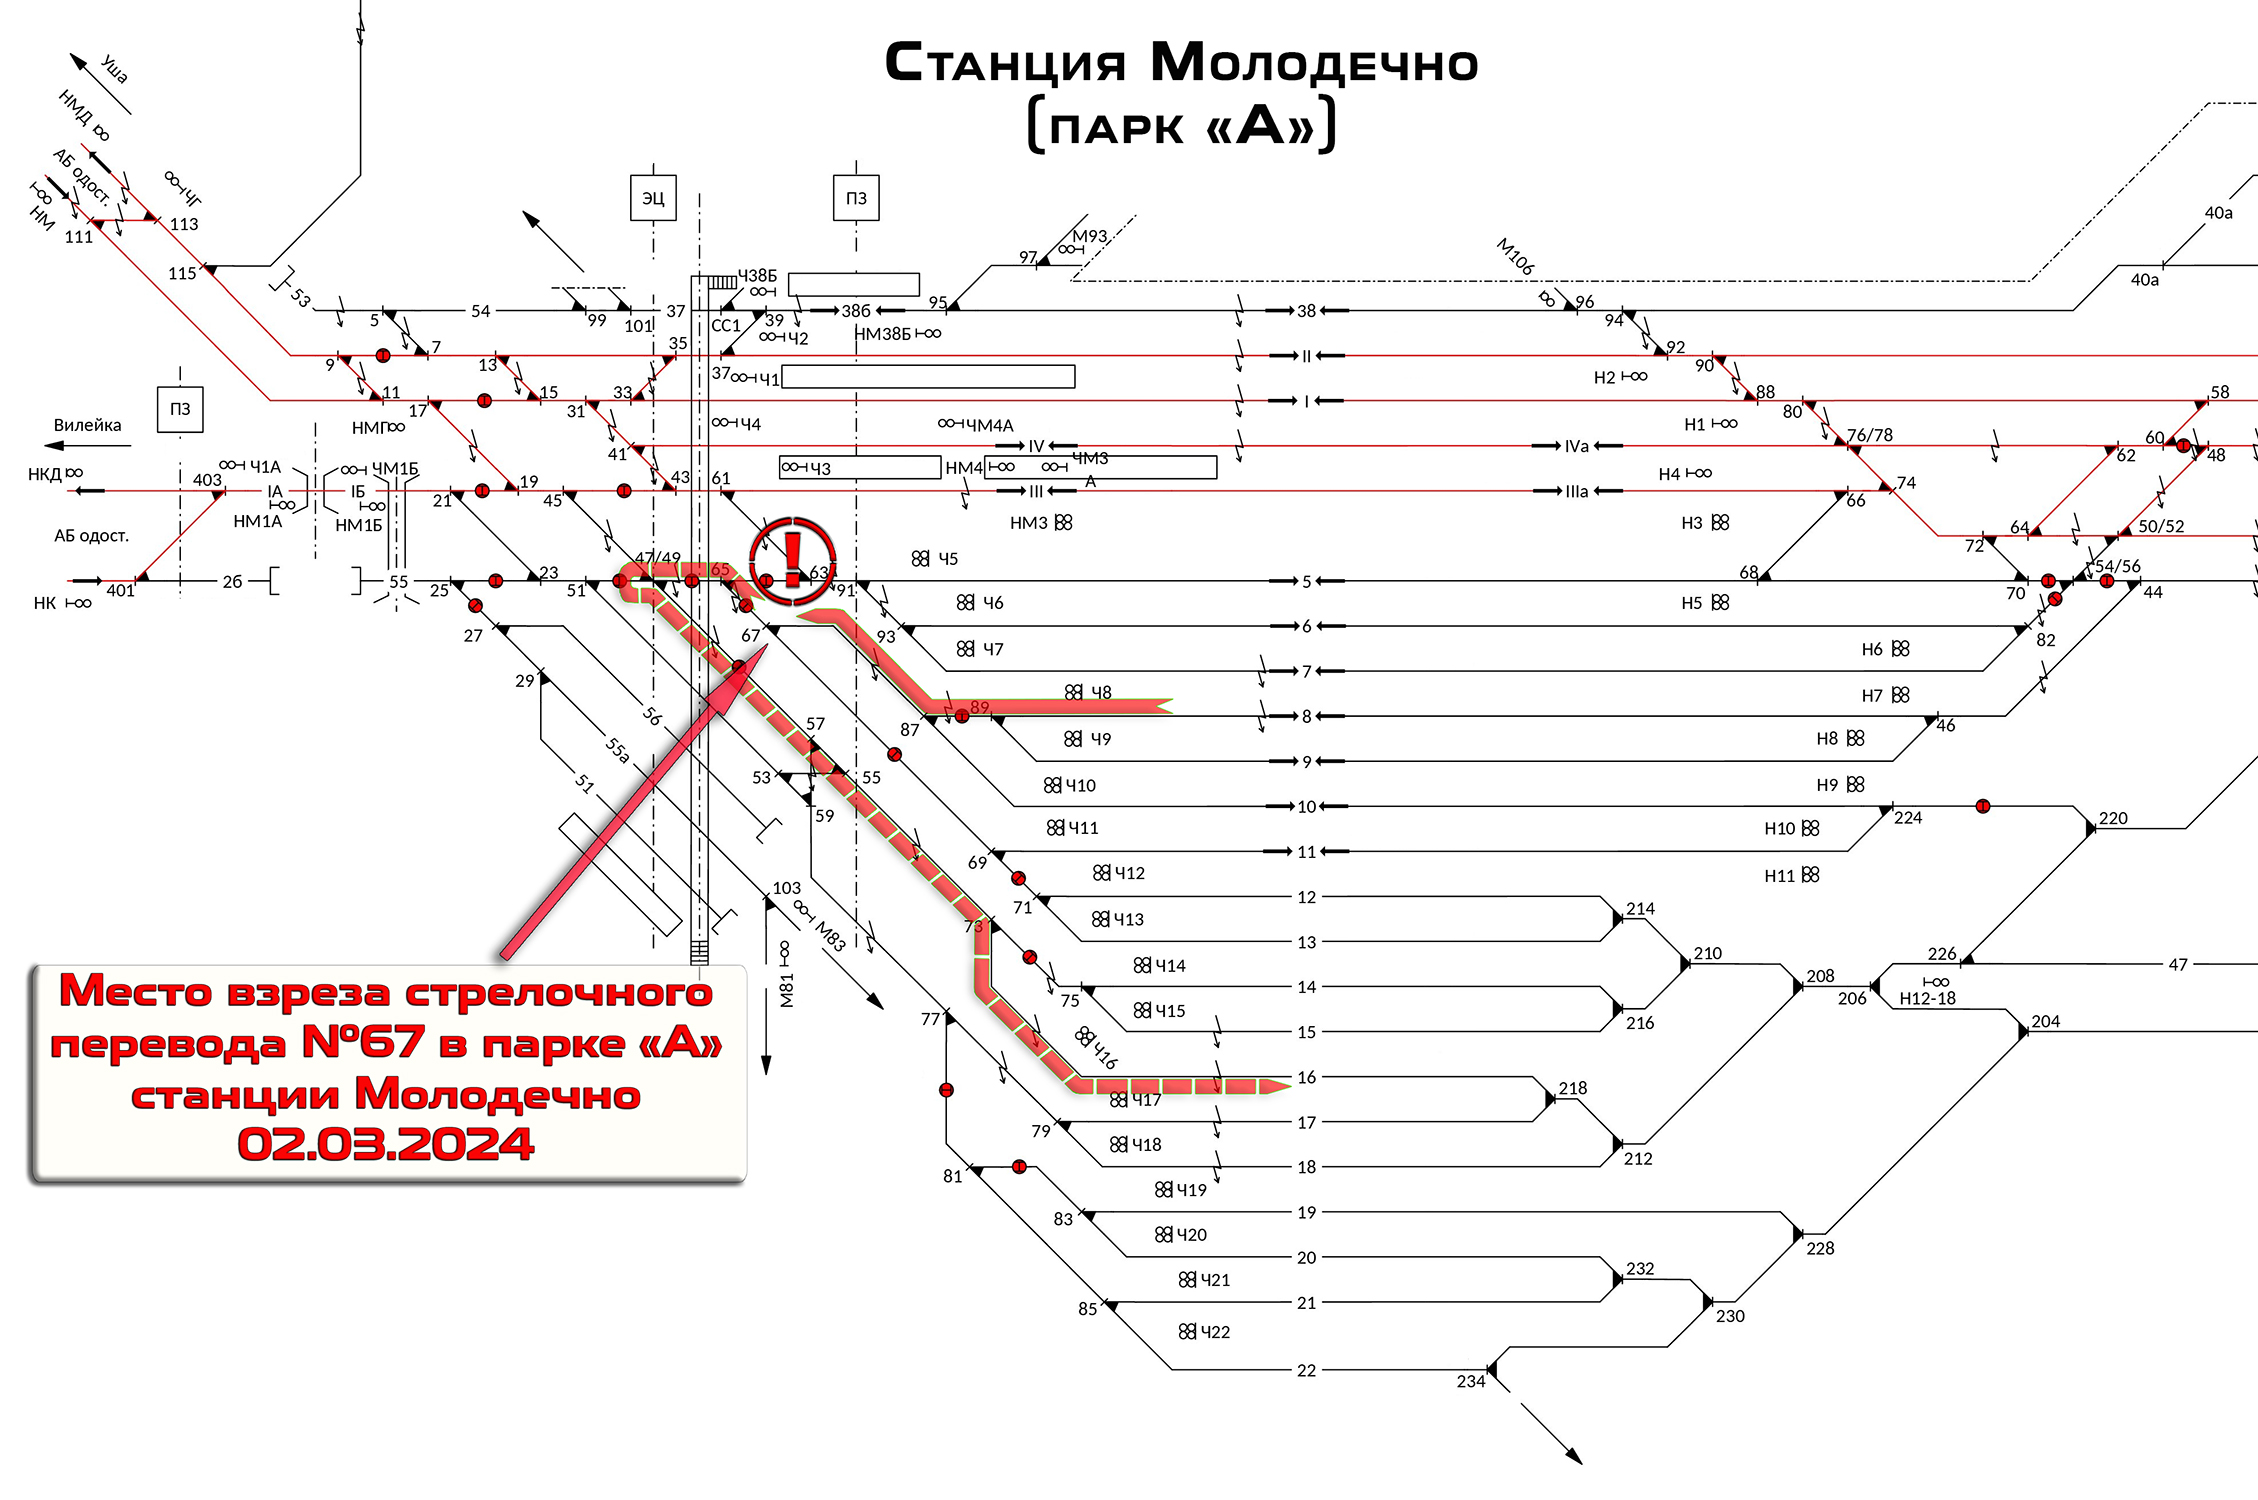 Схема движения маневрового состава при взрезе 02.03.2024 стрелочного перевода №67 на станции Молодечно